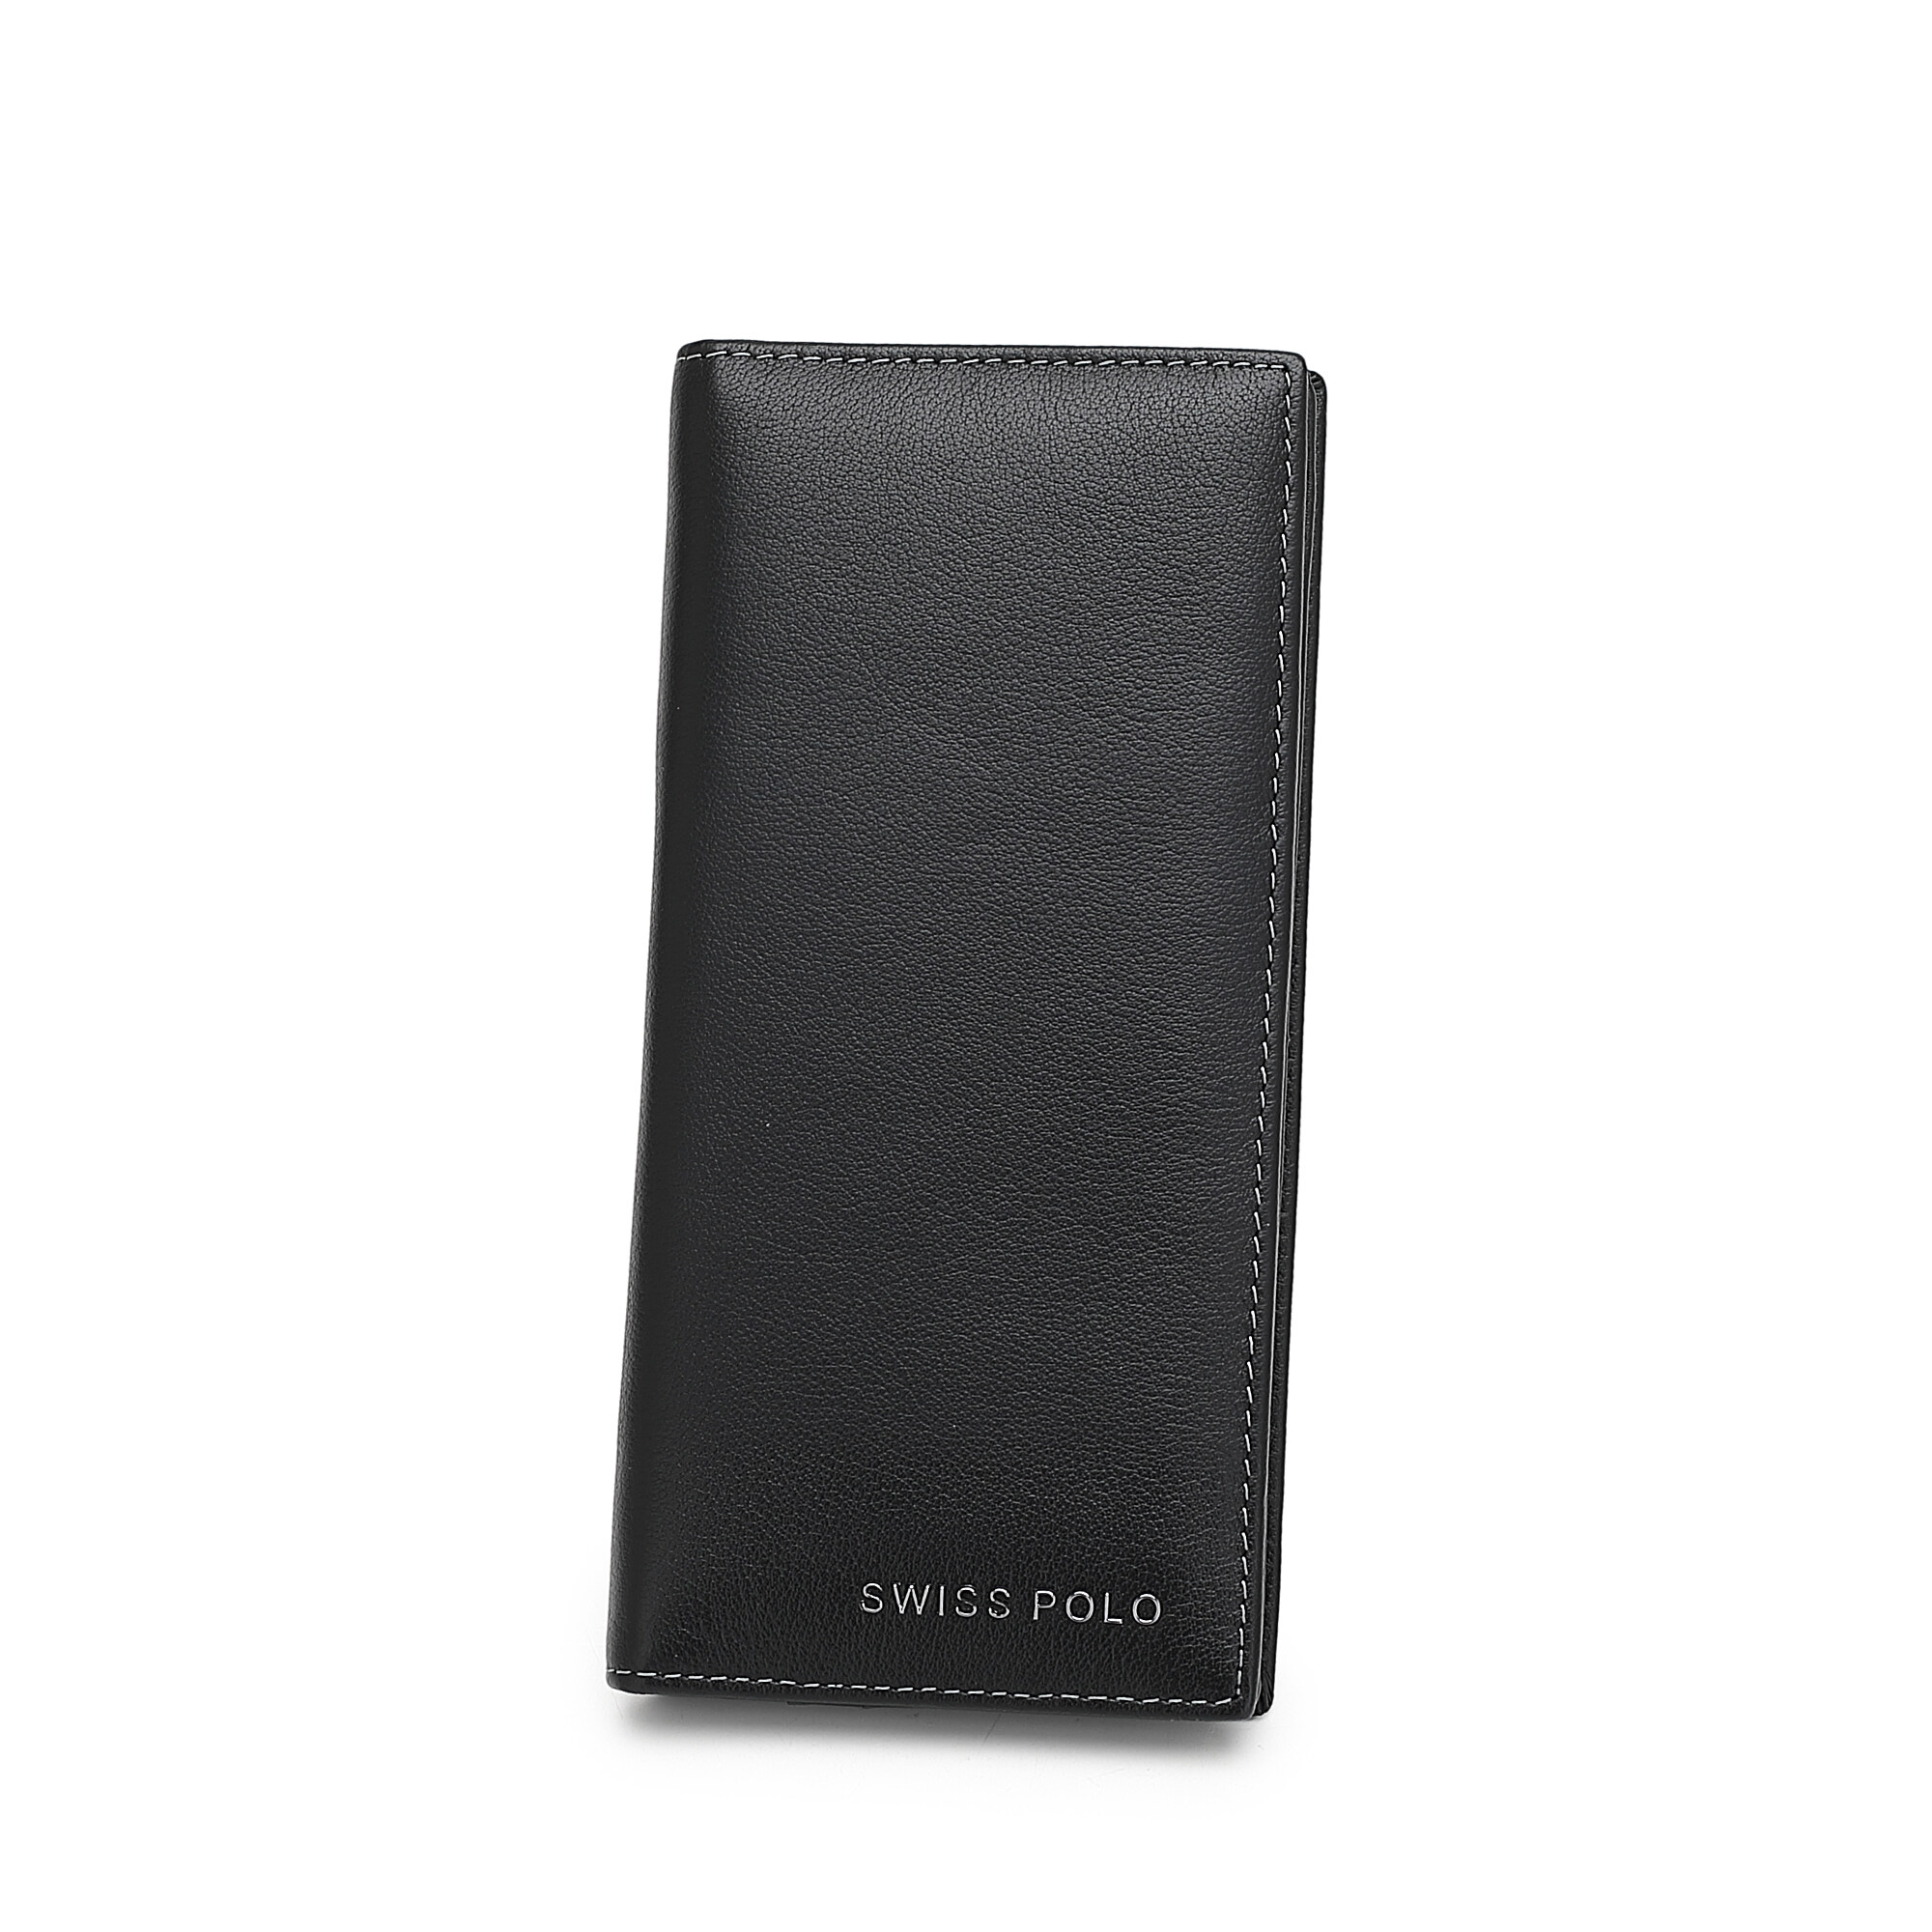 SWISS POLO Genuine Leather Long Wallet SW 196-1 BLACK